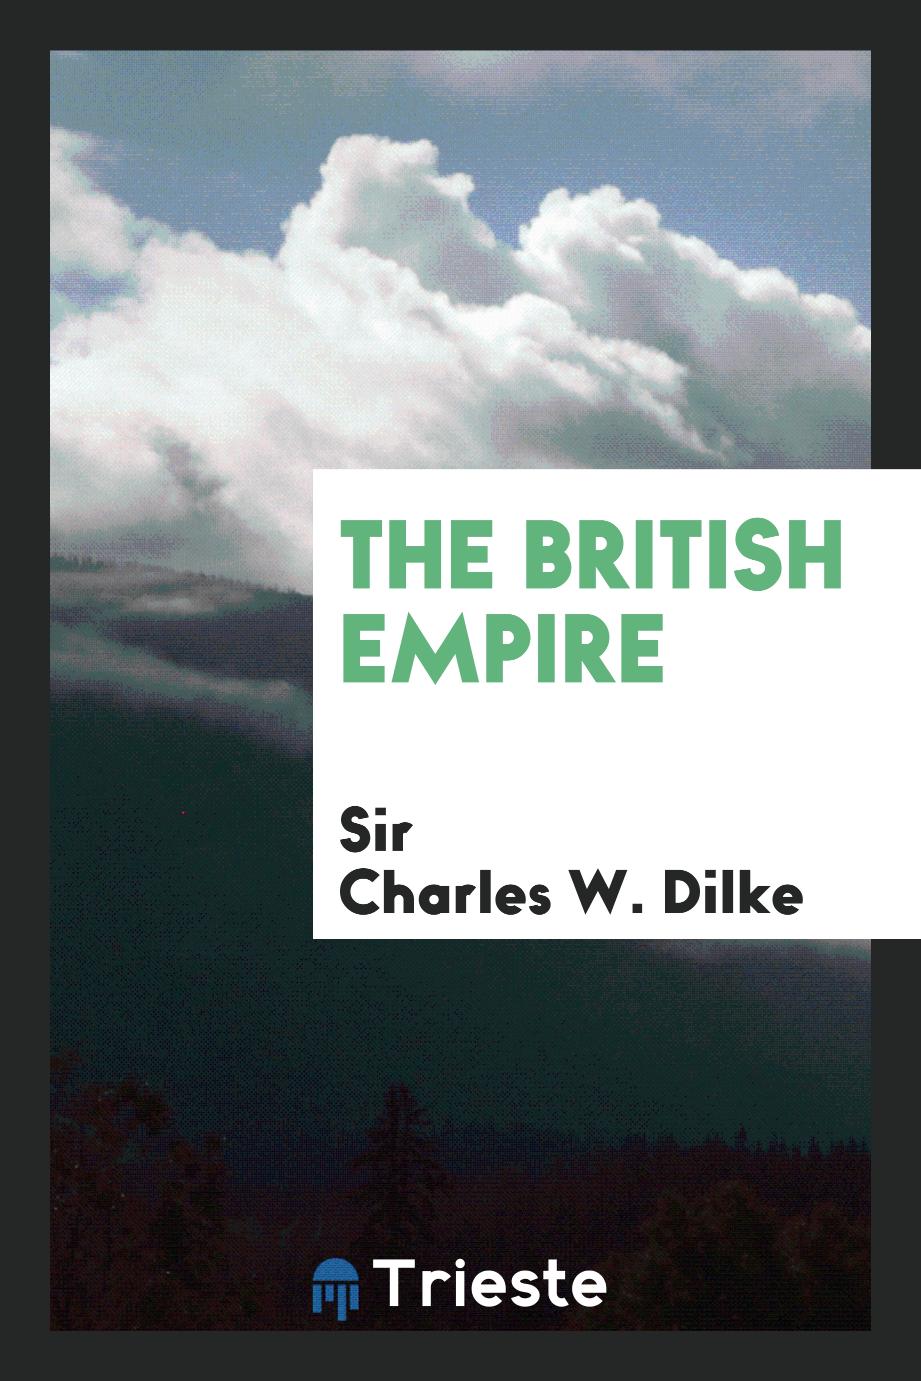 The British empire